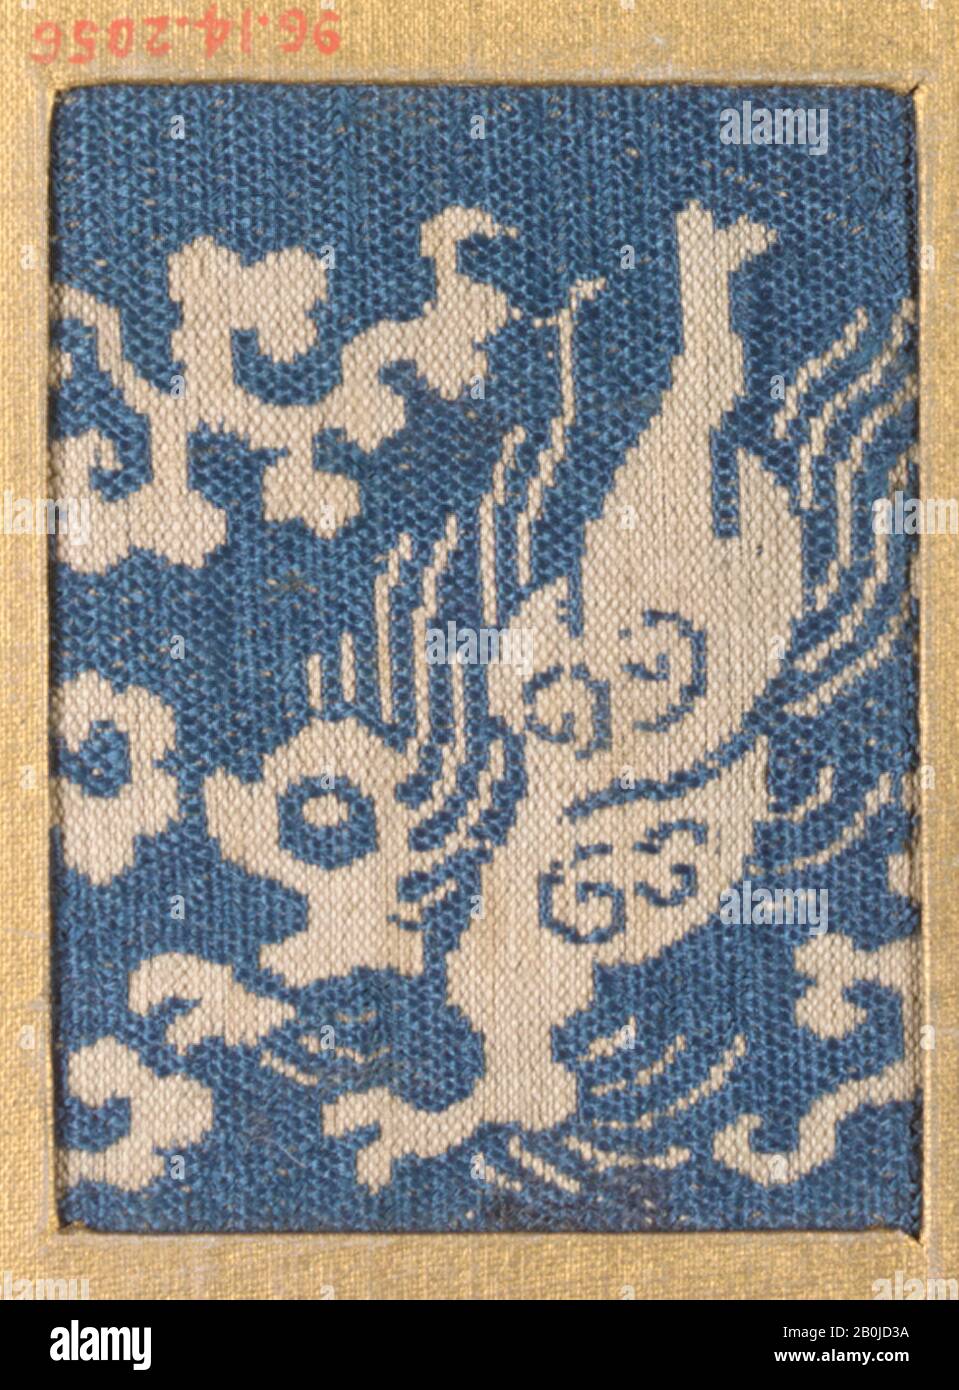 Piece, Japan, 18th–19th century, Japan, Silk, 3 1/4 x 2 1/4 in. (8.26 x 5.71 cm), Textiles-Woven Stock Photo